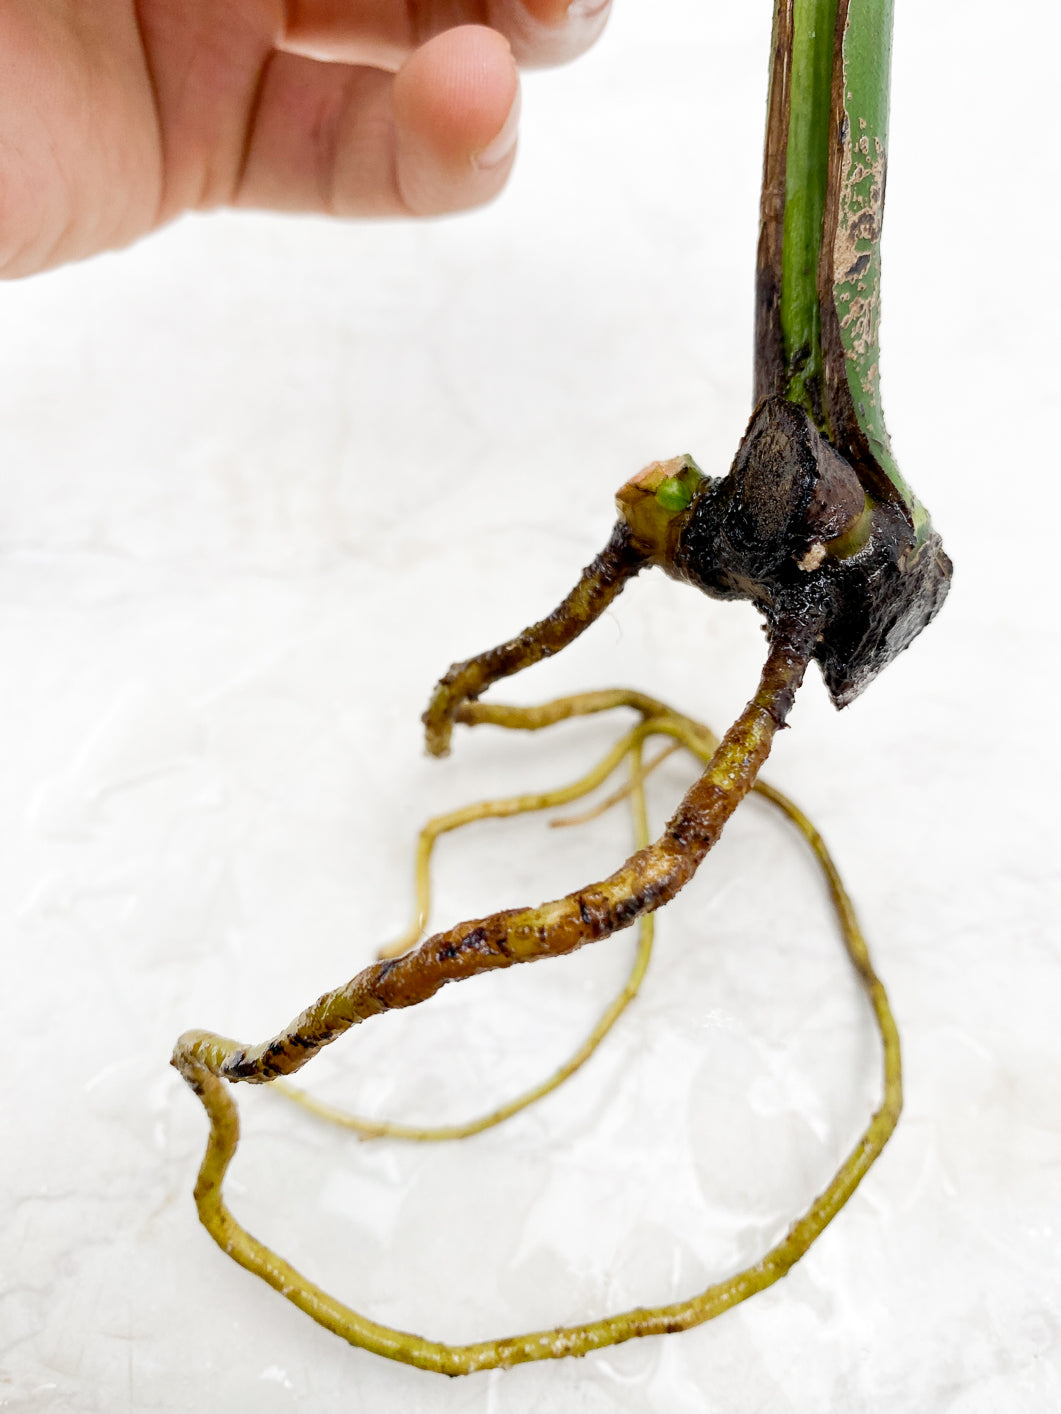 Monstera Mint Noid node 1 growing bud